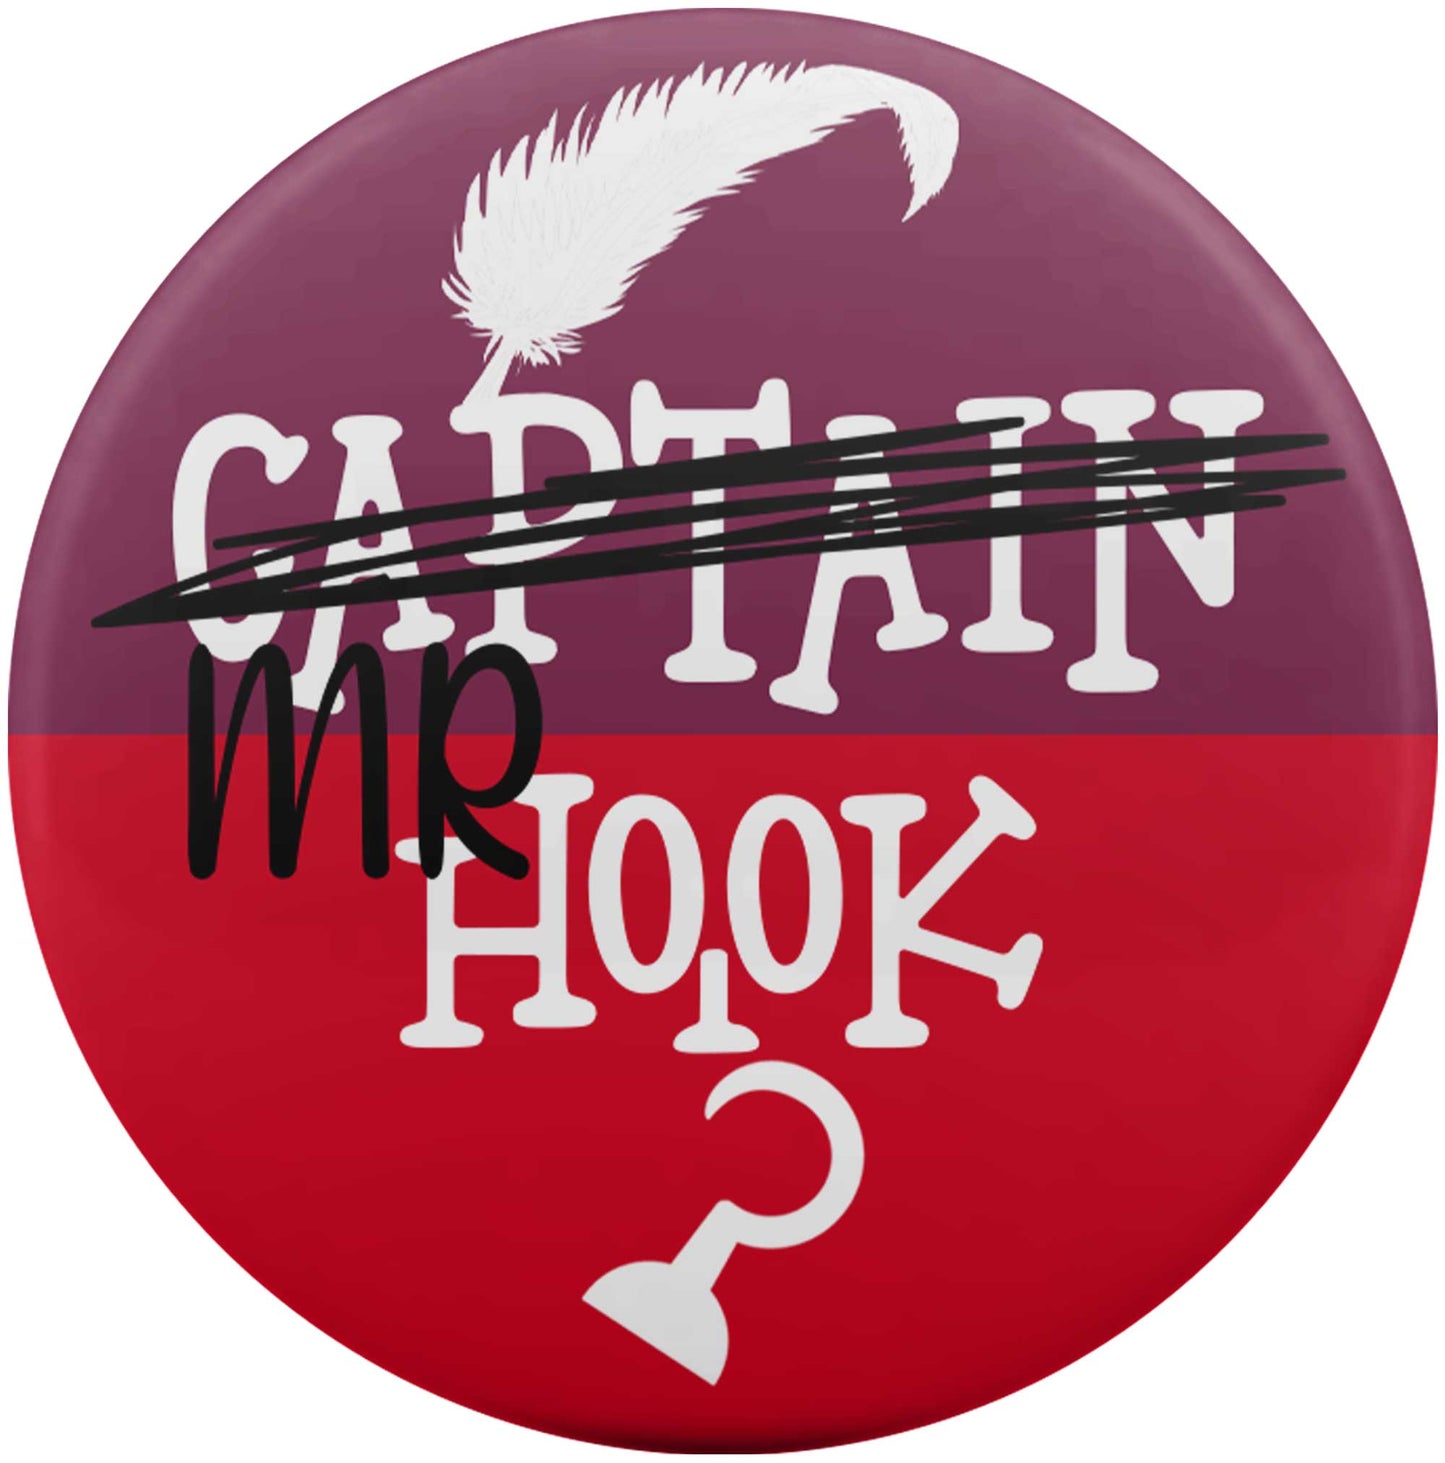 Captain Mr Hook